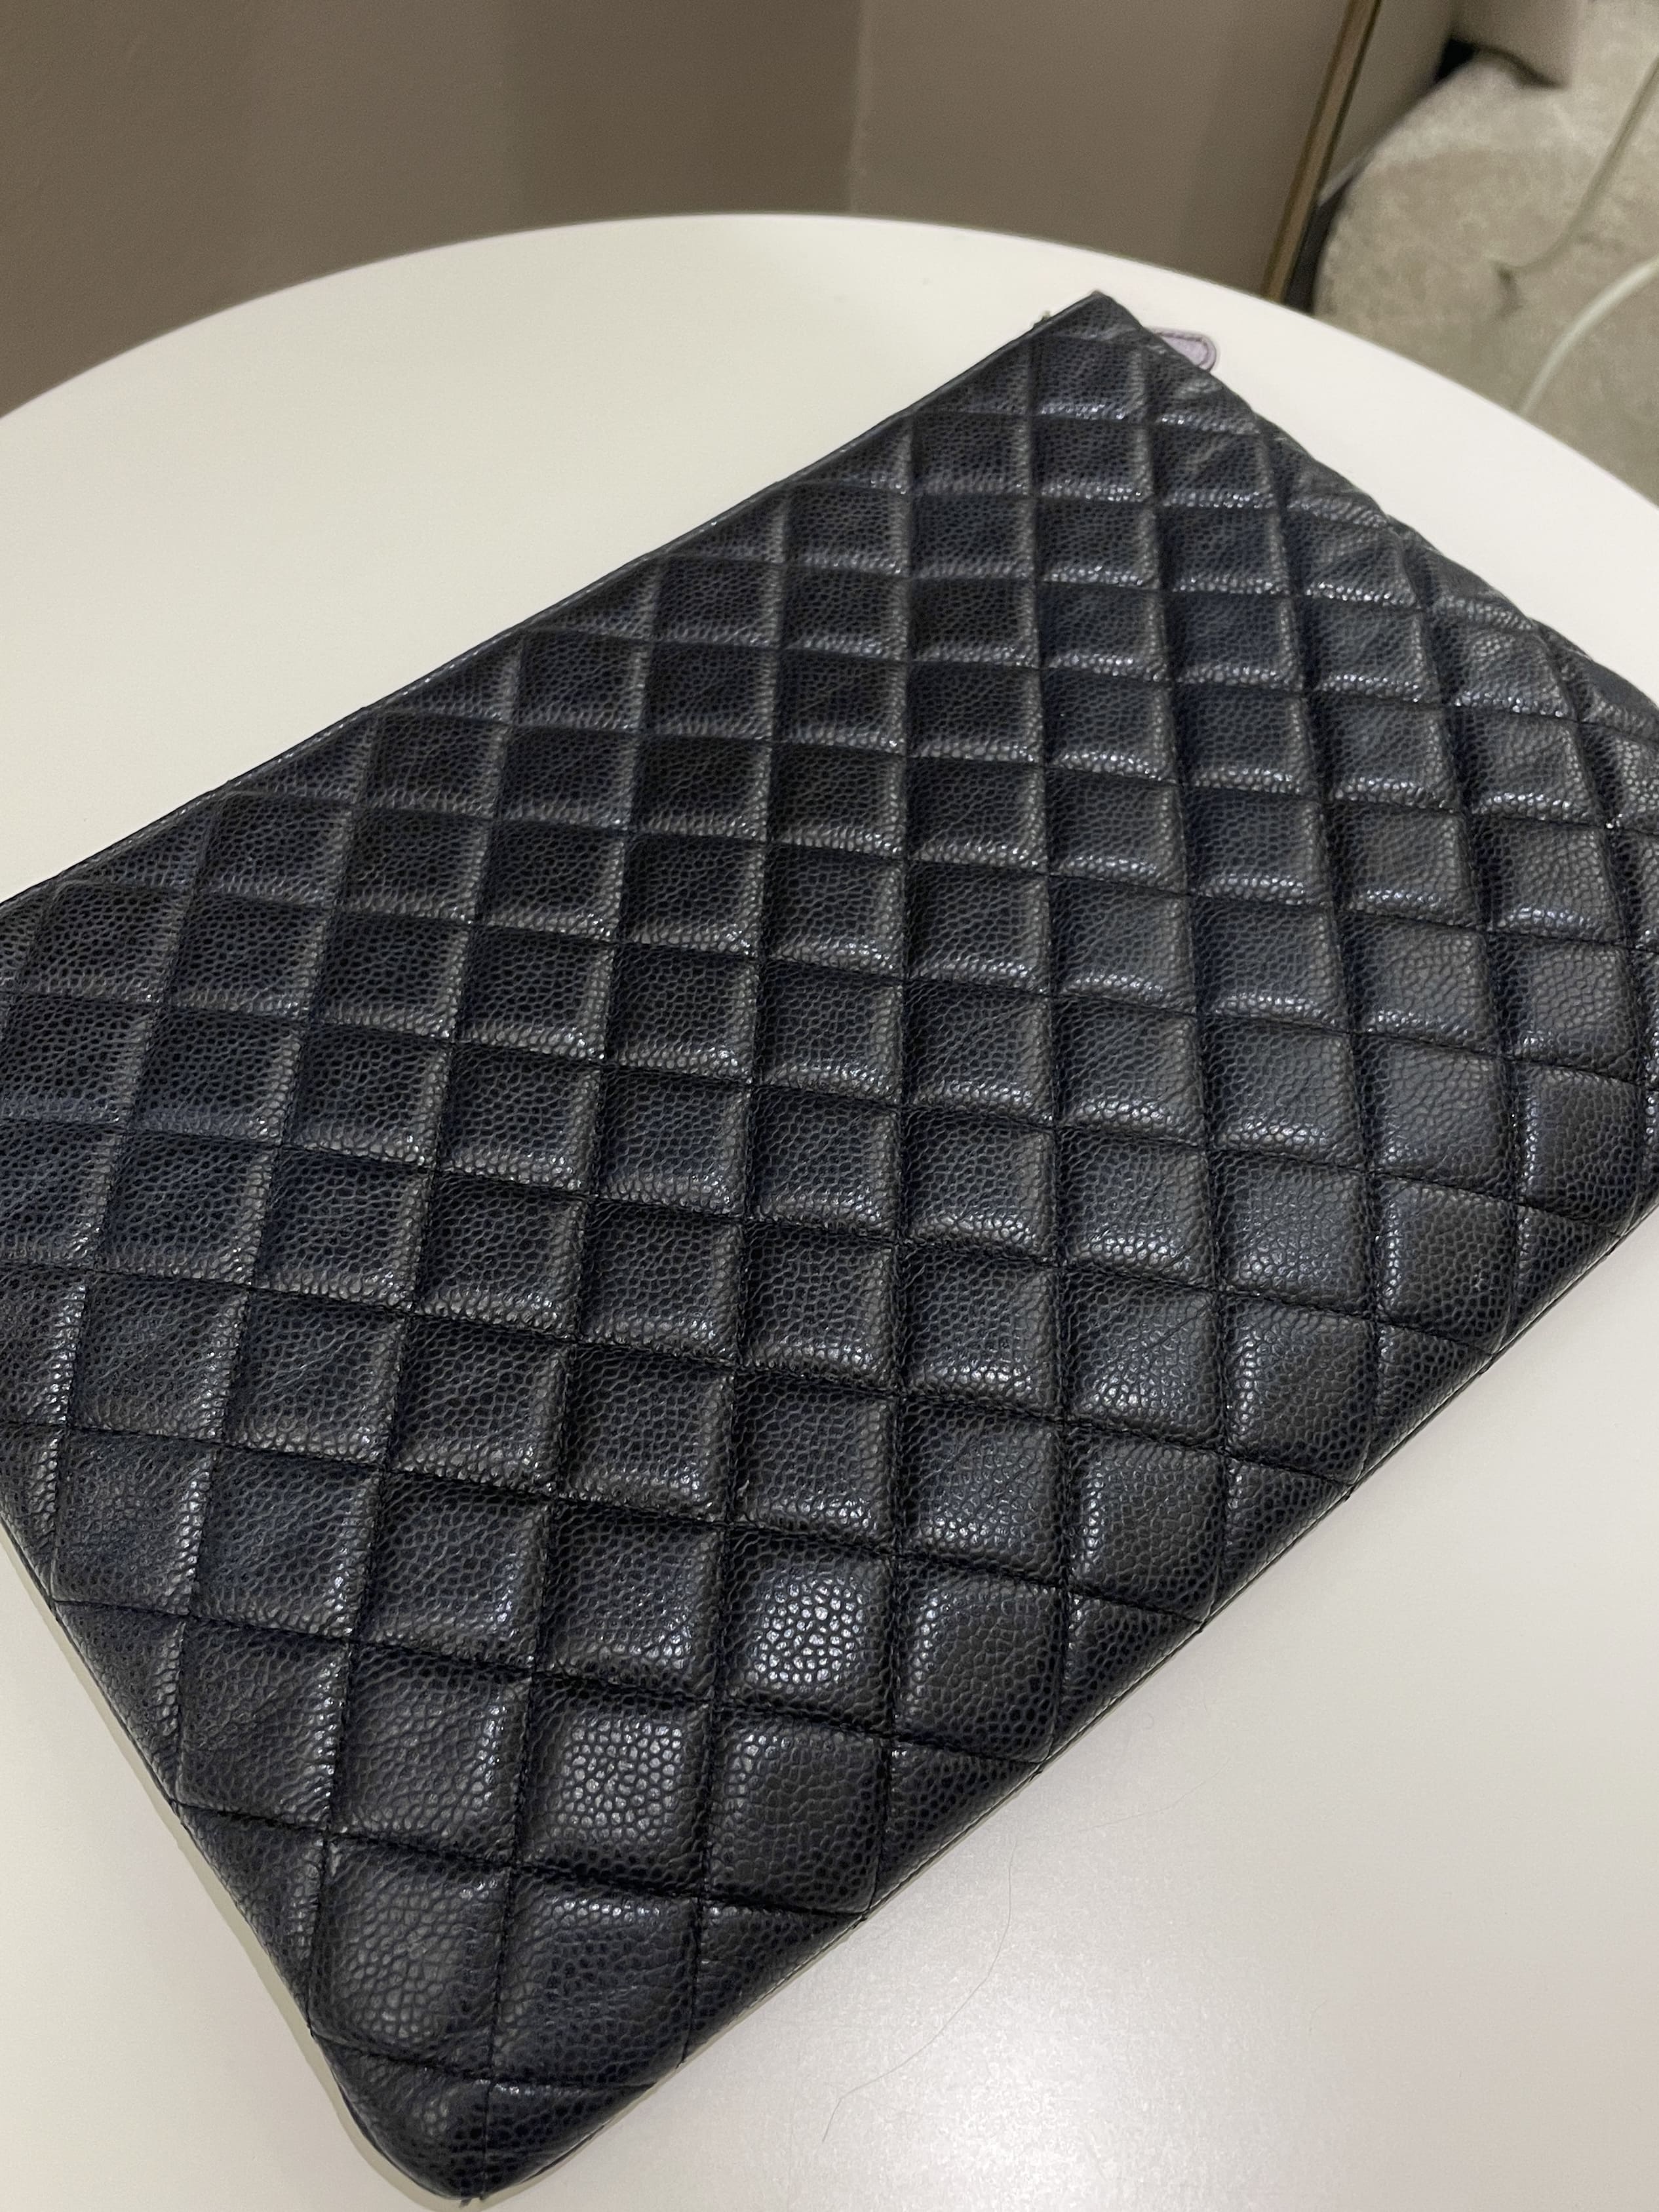 CHANEL Mini O Case Black Caviar Leather SHW Made in Italy BNIB